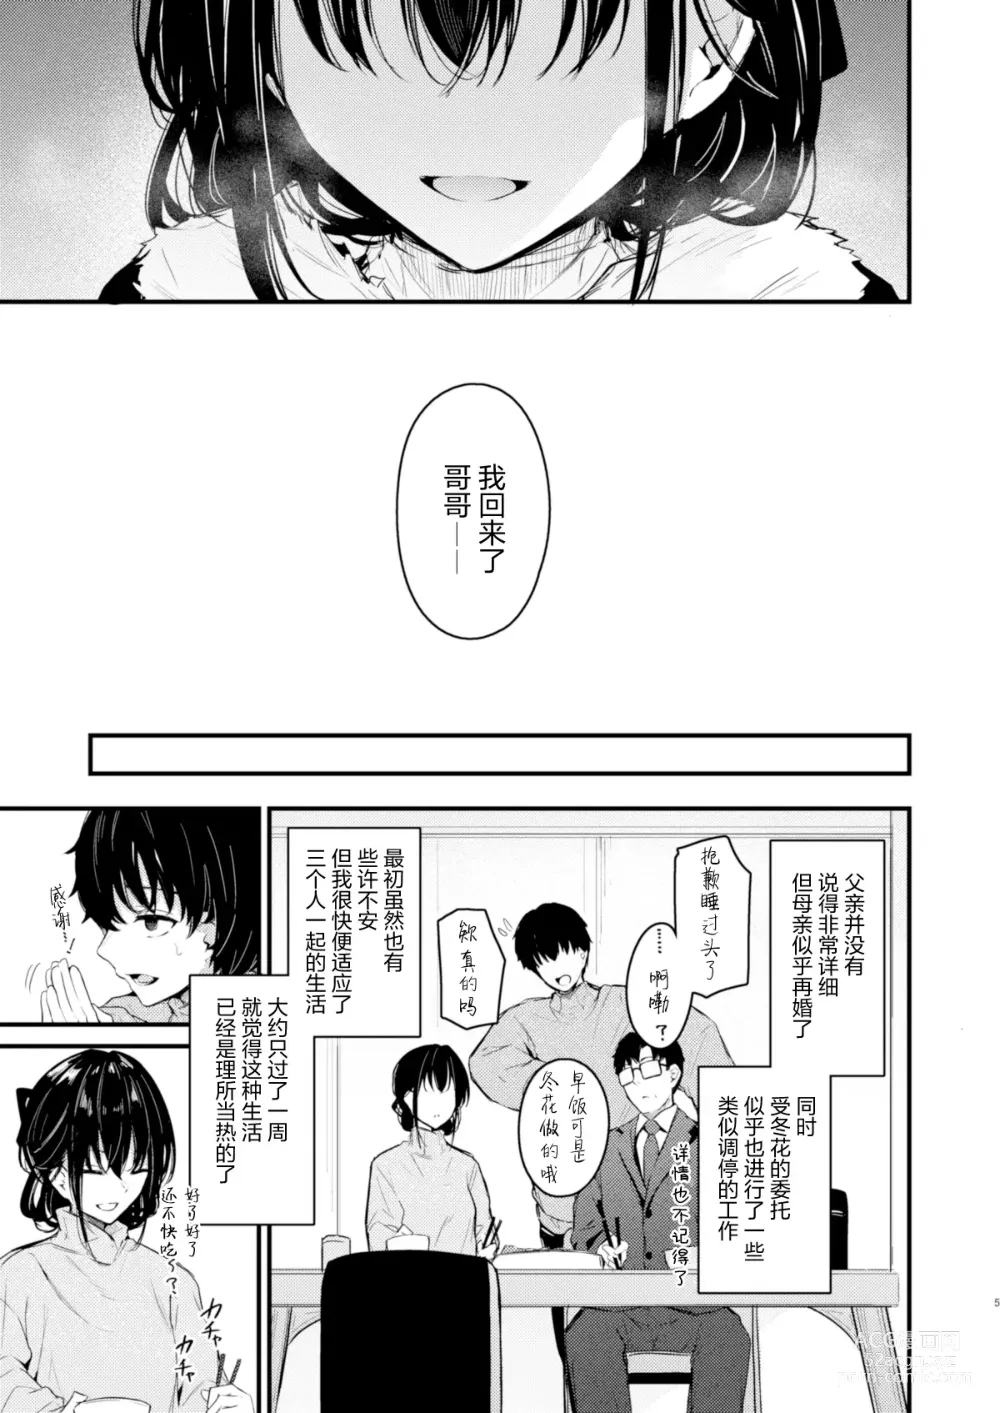 Page 7 of doujinshi PULCHRE BENE RECTE!